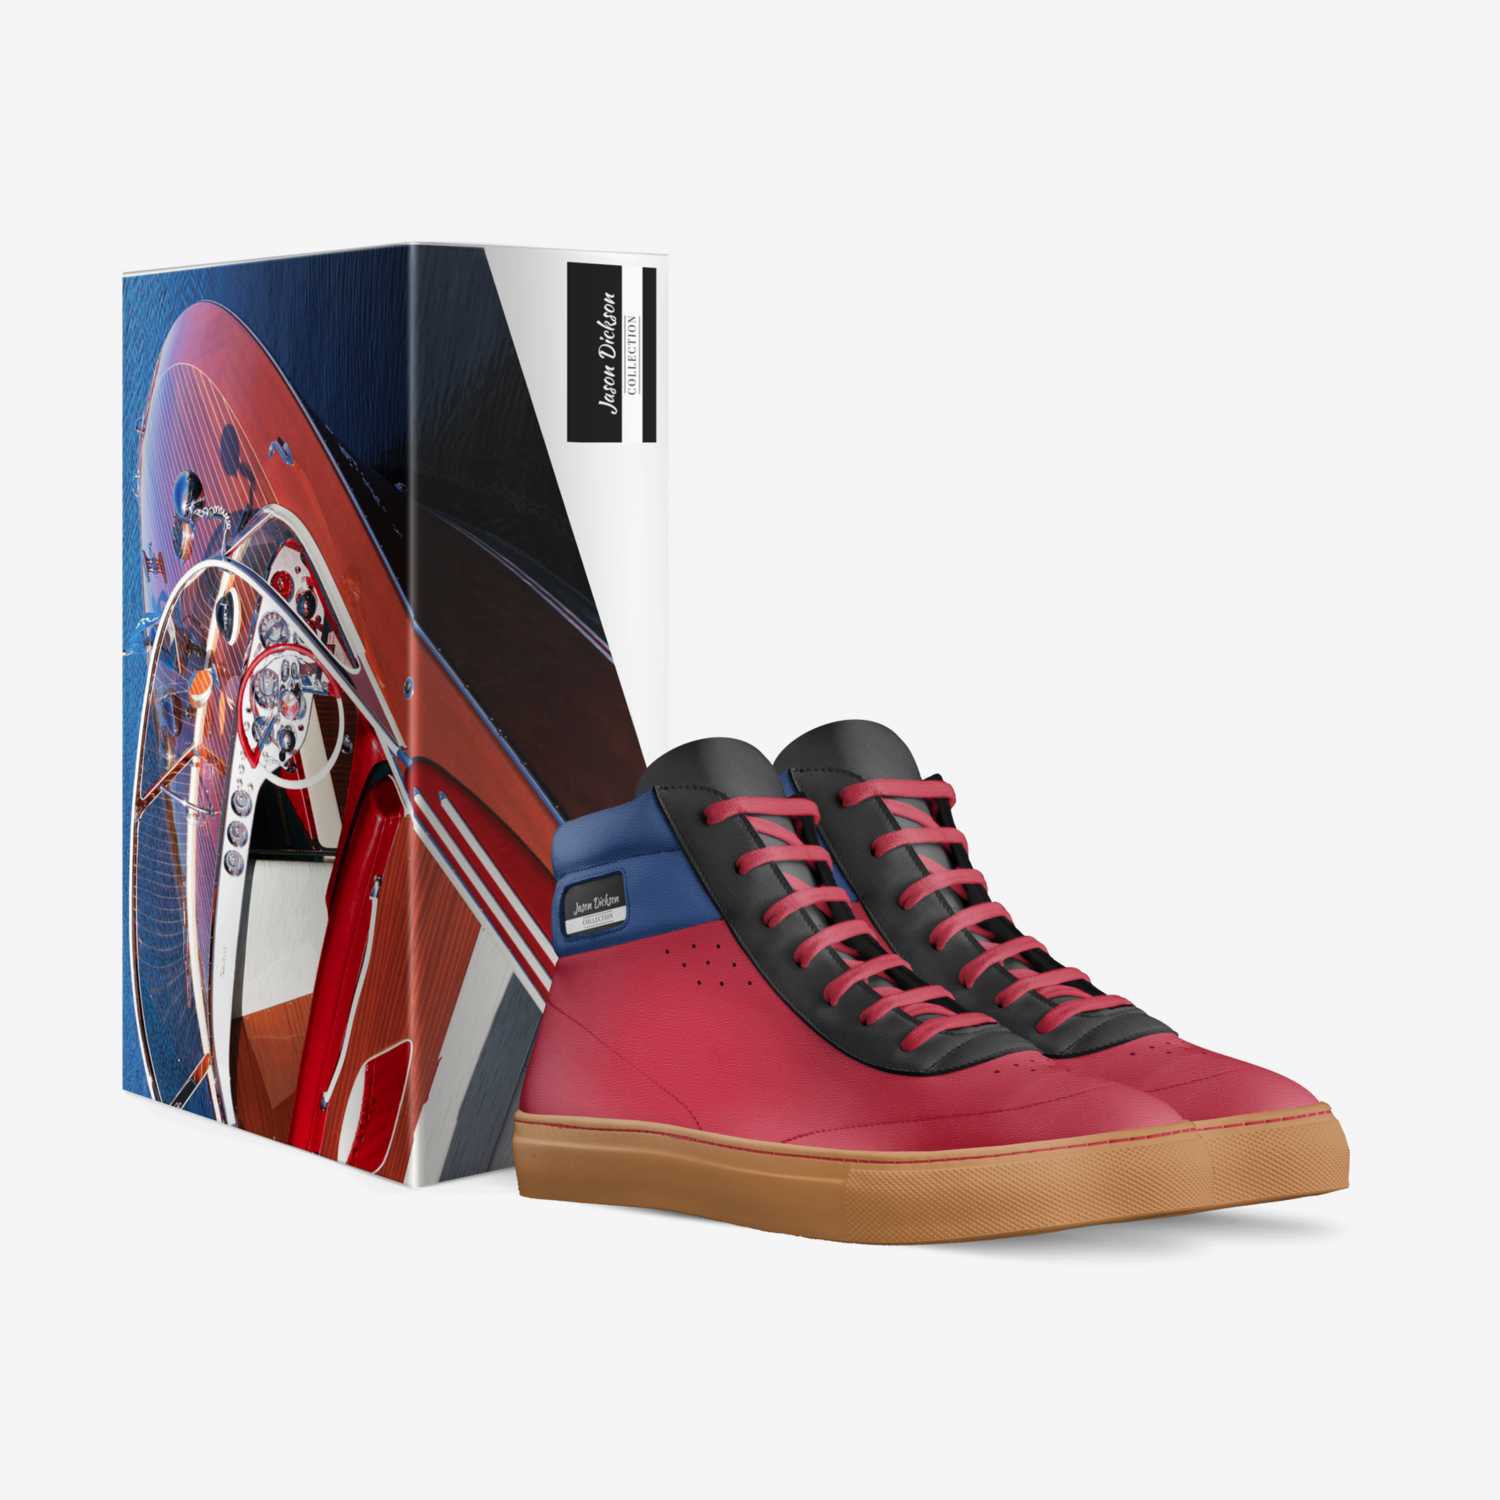 Jason Dickson custom made in Italy shoes by Jason Dickson | Box view